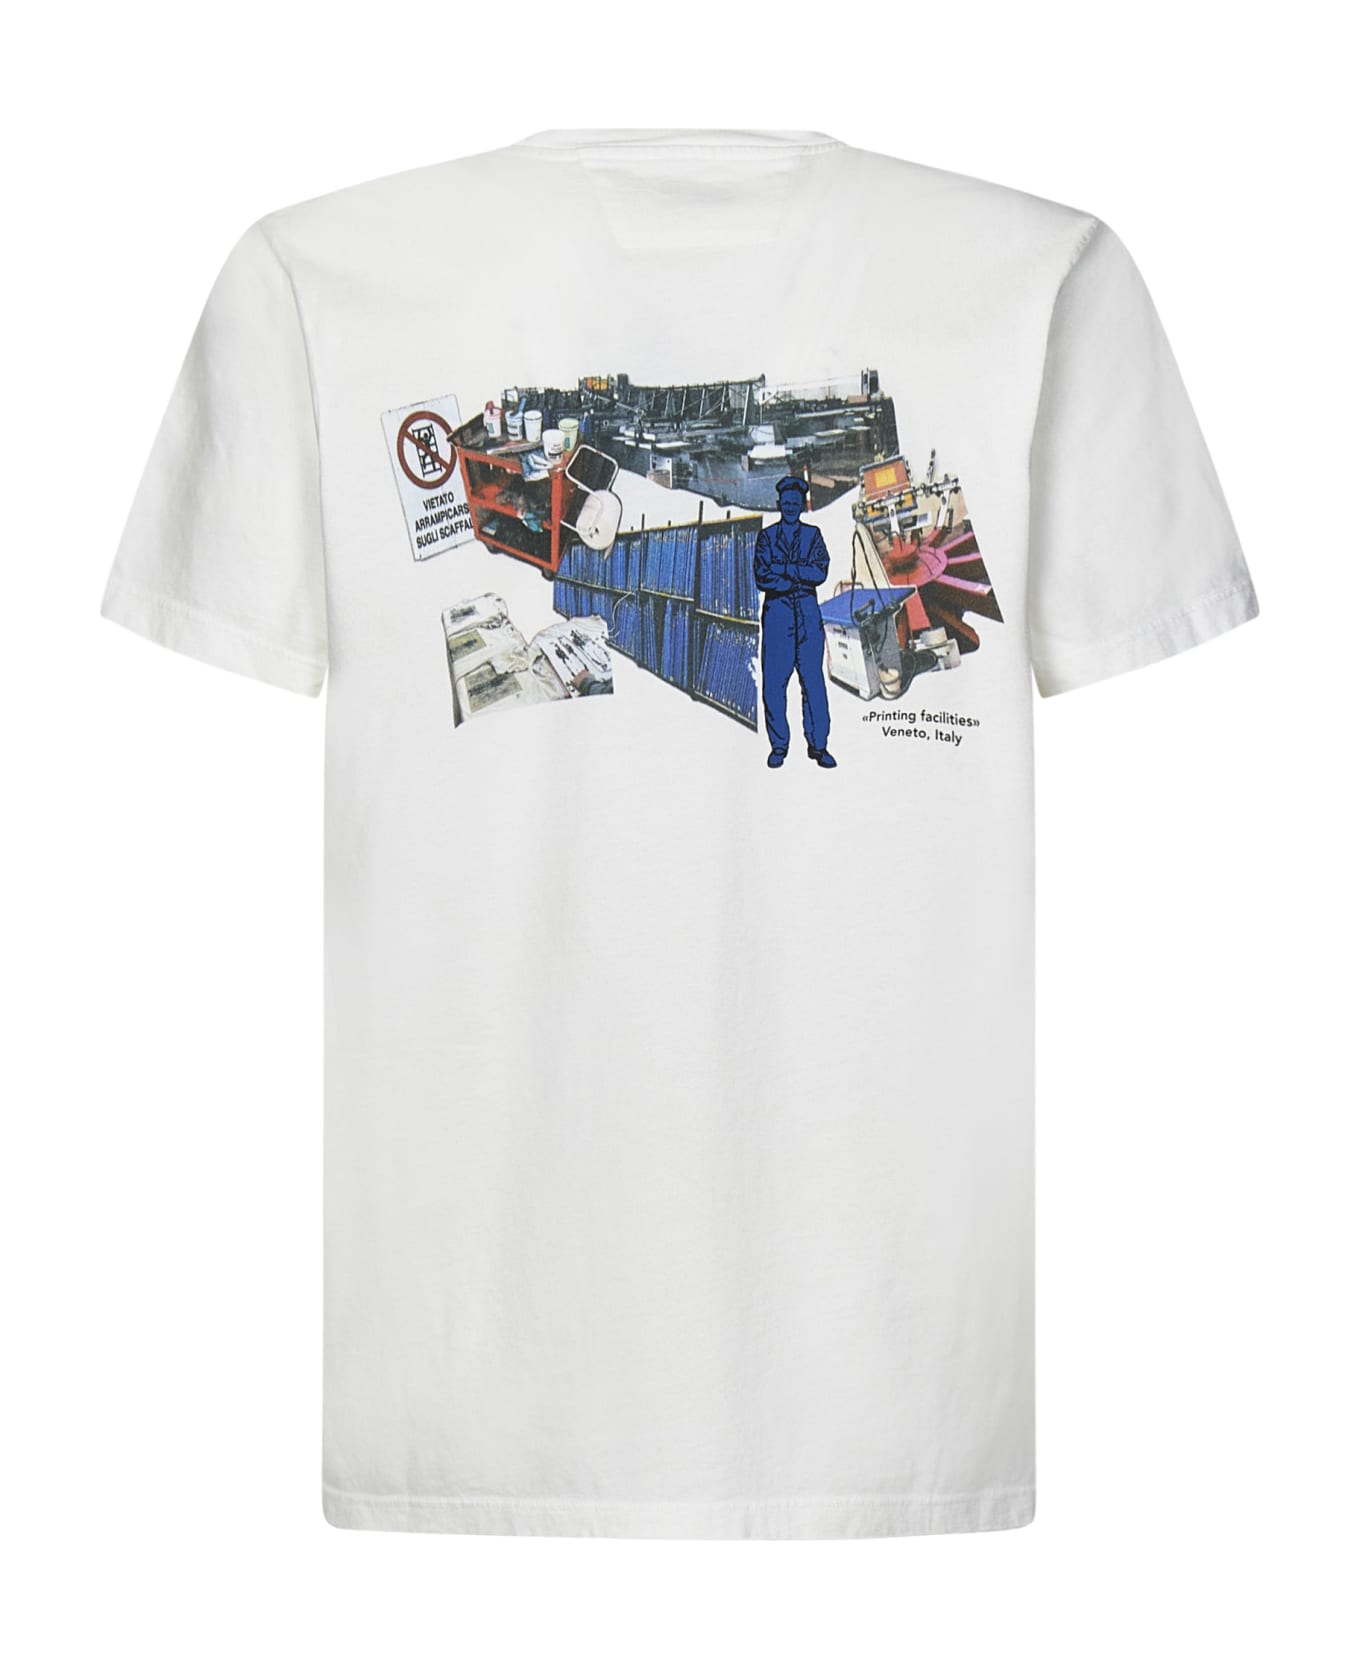 C.P. Company T-shirt - GAUZE WHITE シャツ